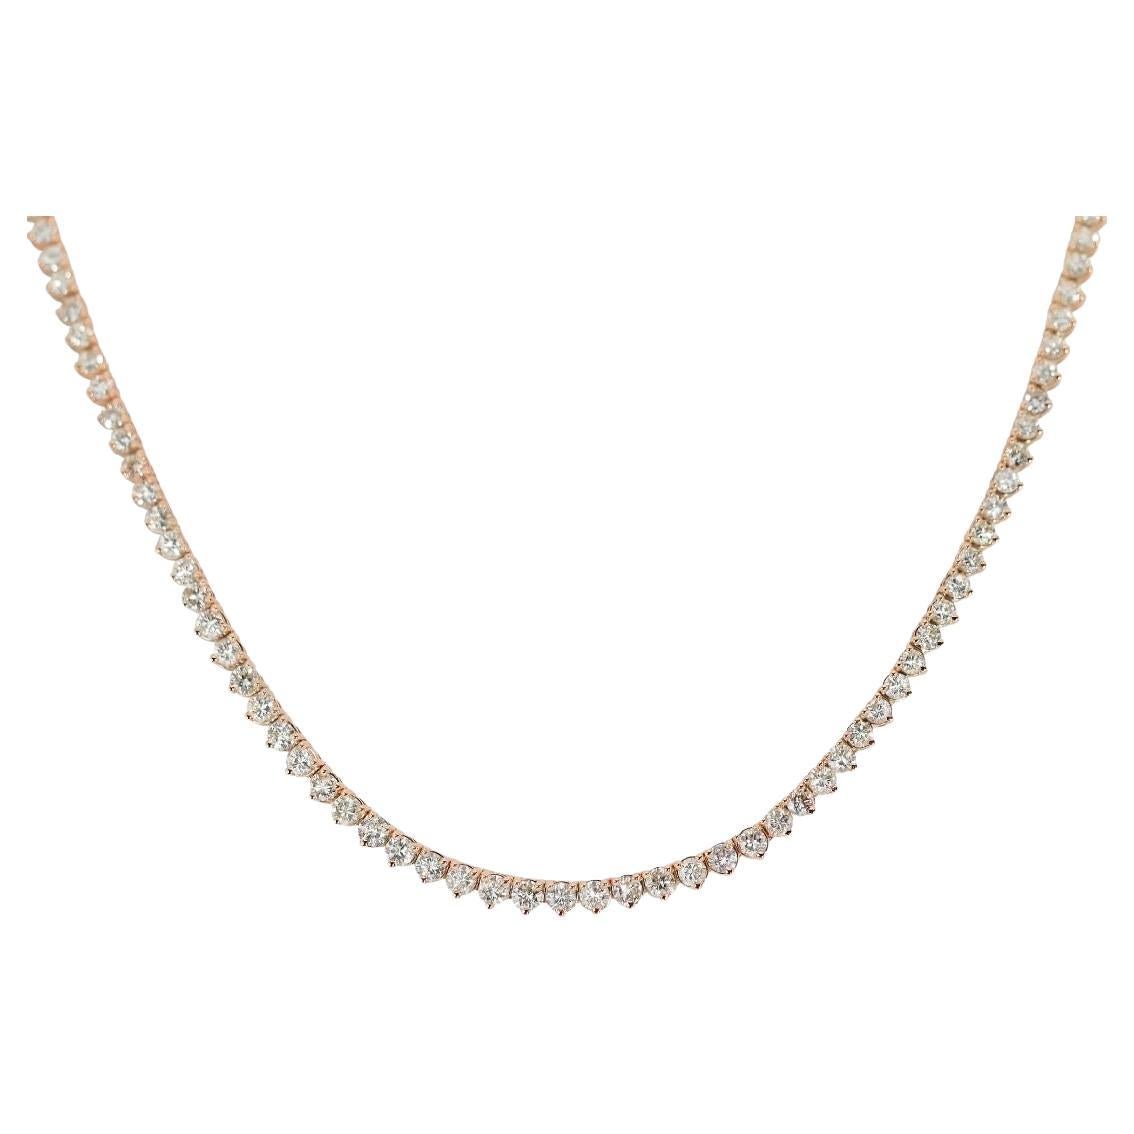 Extraordinary De Guardia Necklace with 8.67ct Round Brilliant Diamonds